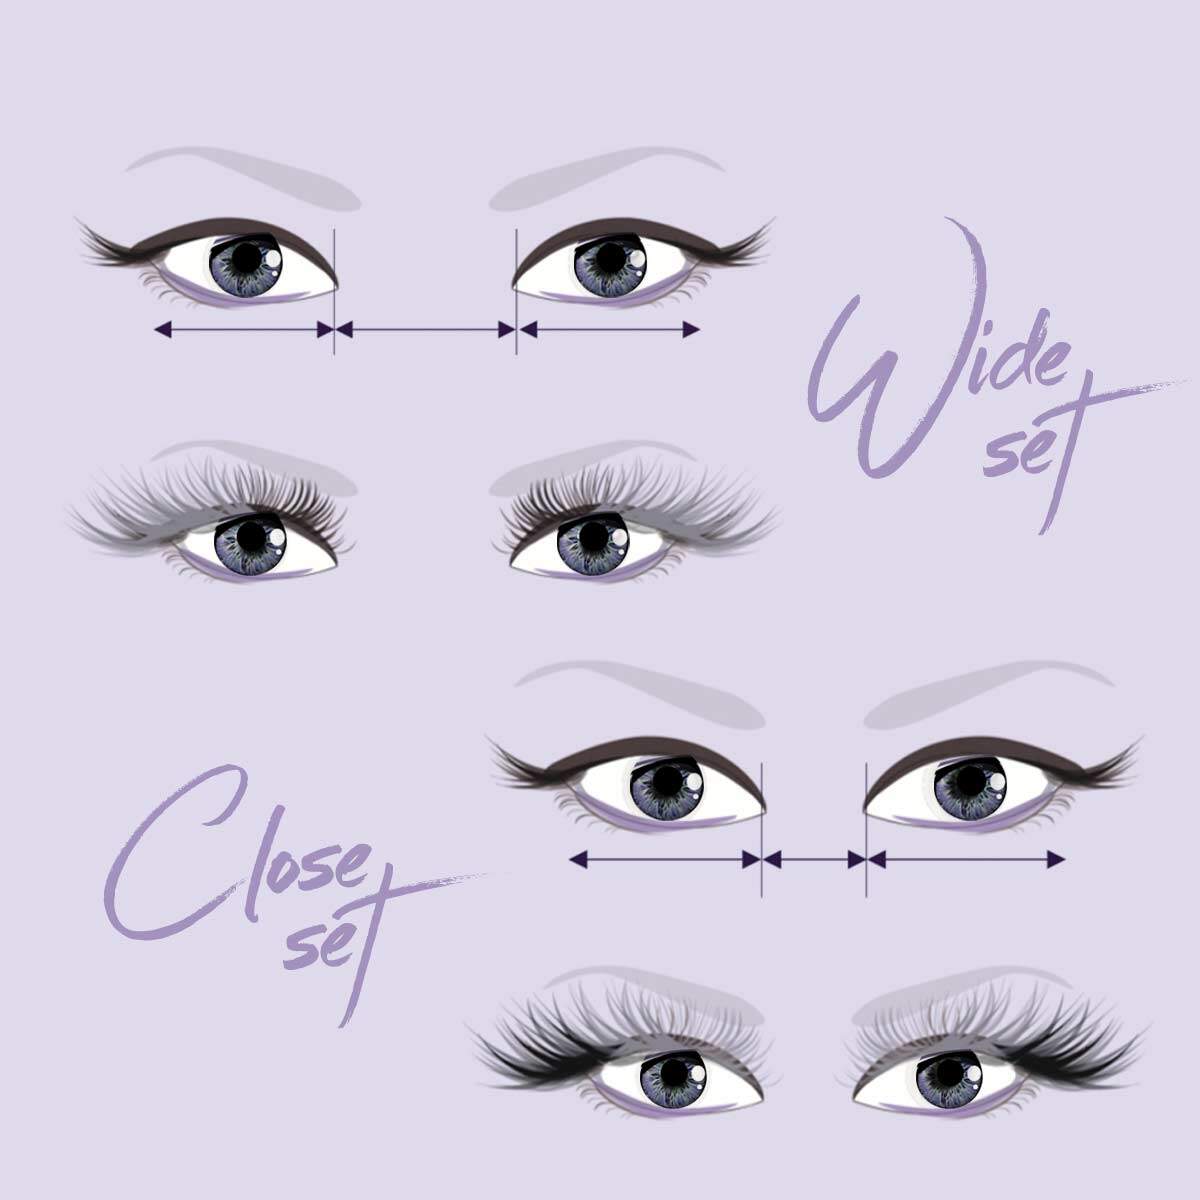 wide set and close set eyes diagram